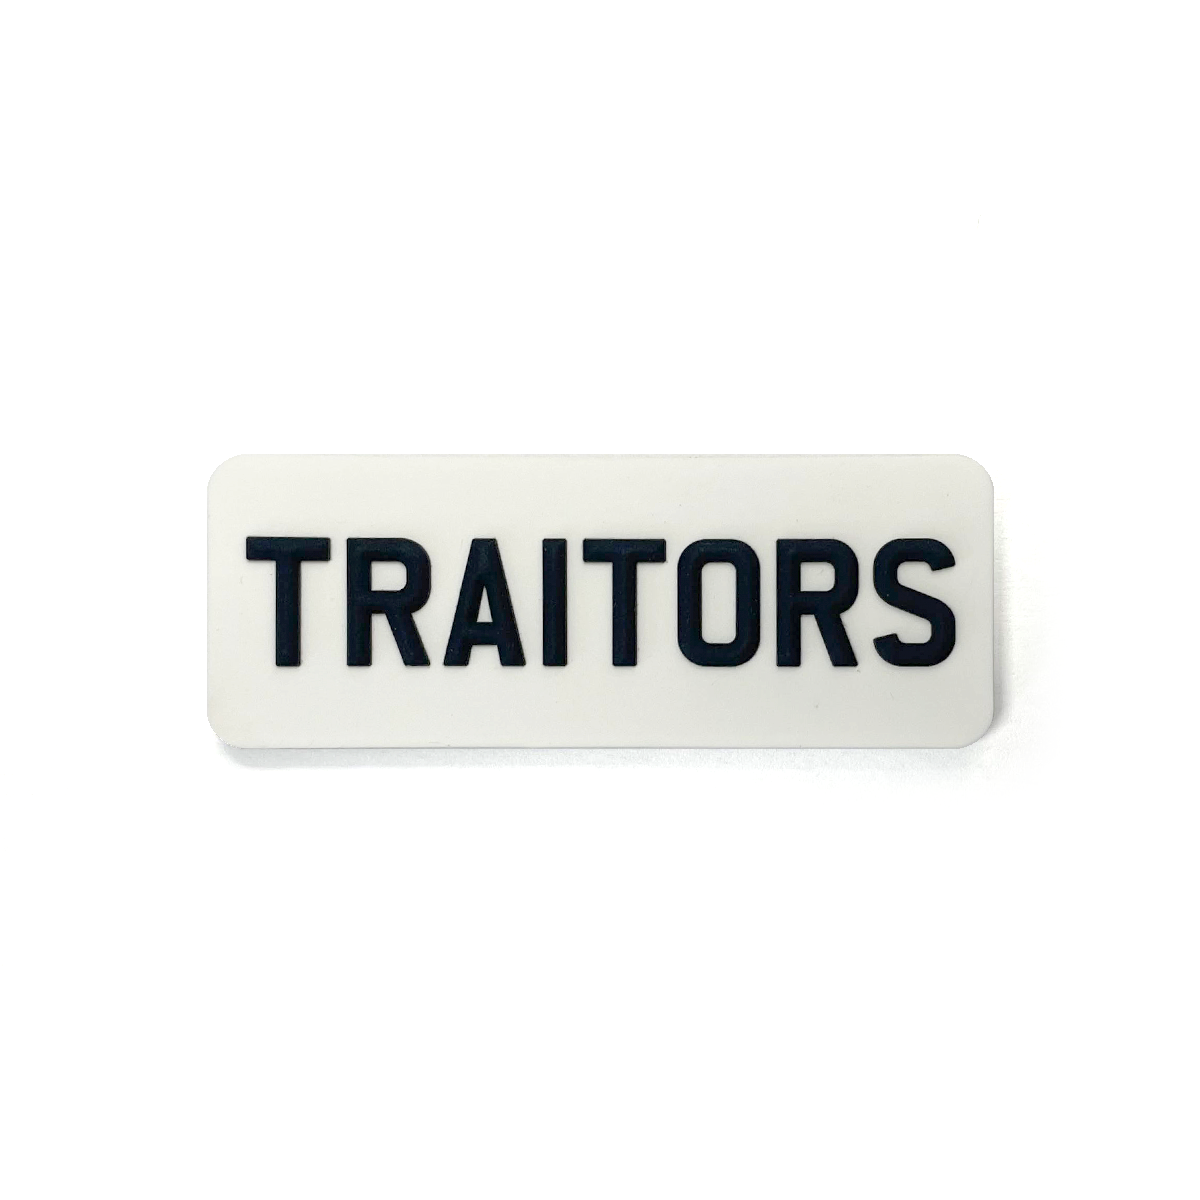 The Traitors Number Plate Fridge Magnet